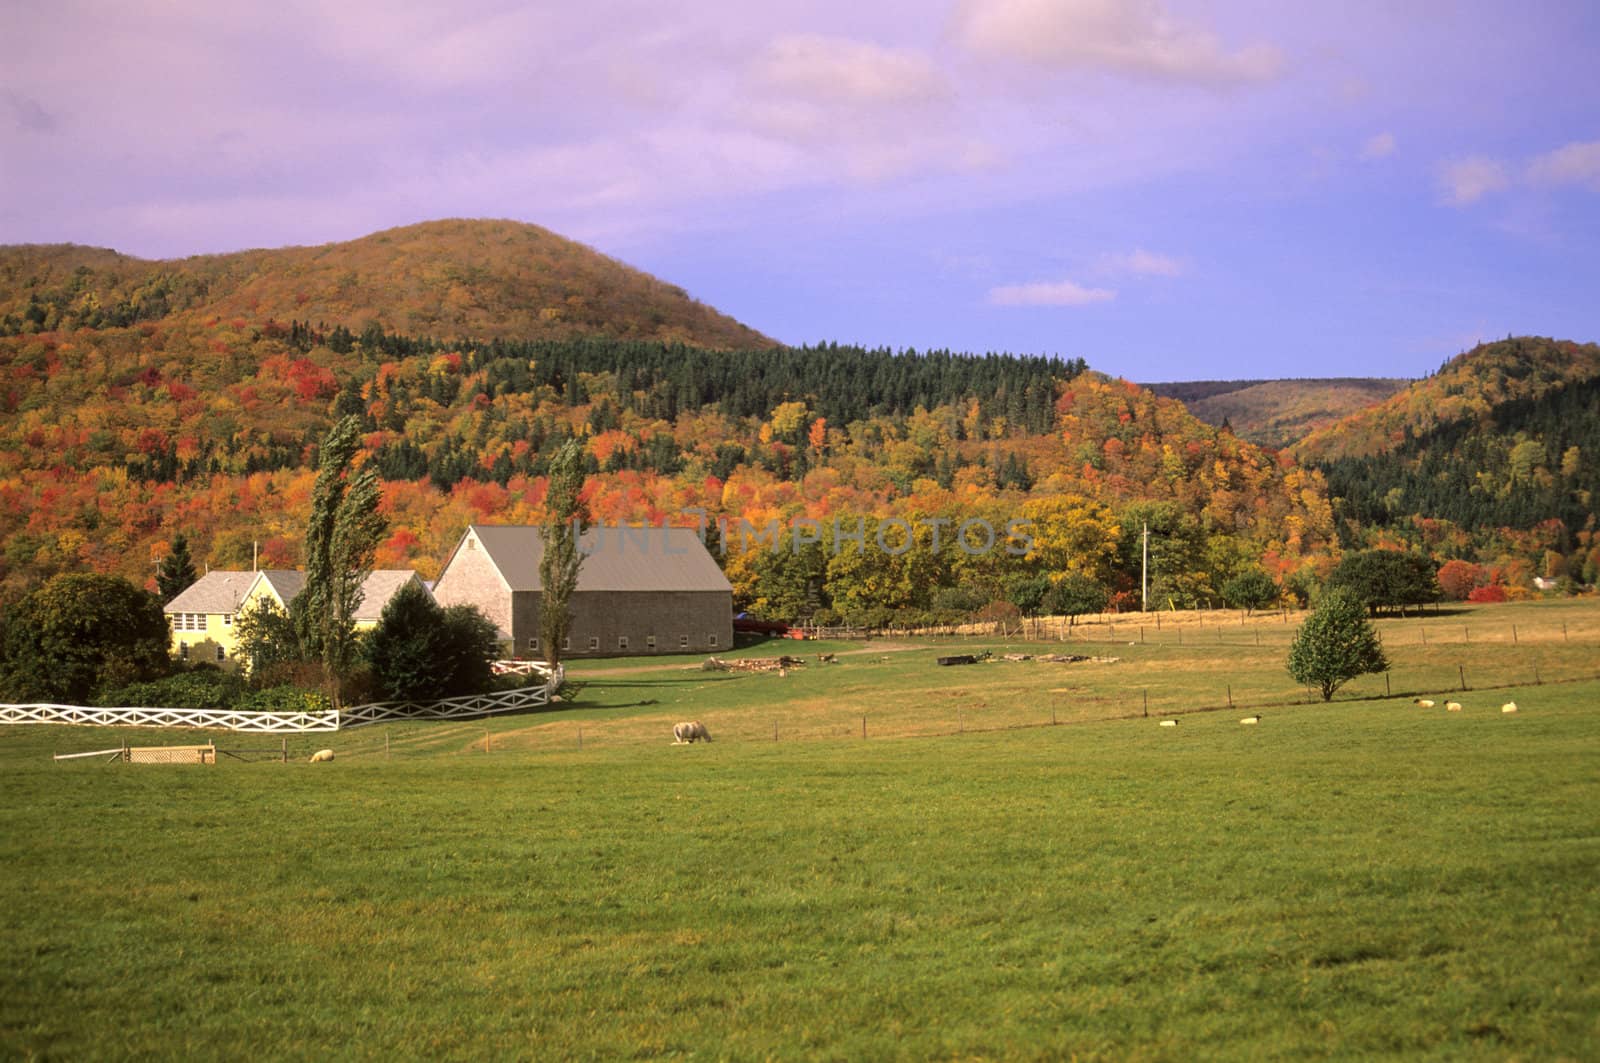 Rural Farm in Autumn by ACMPhoto